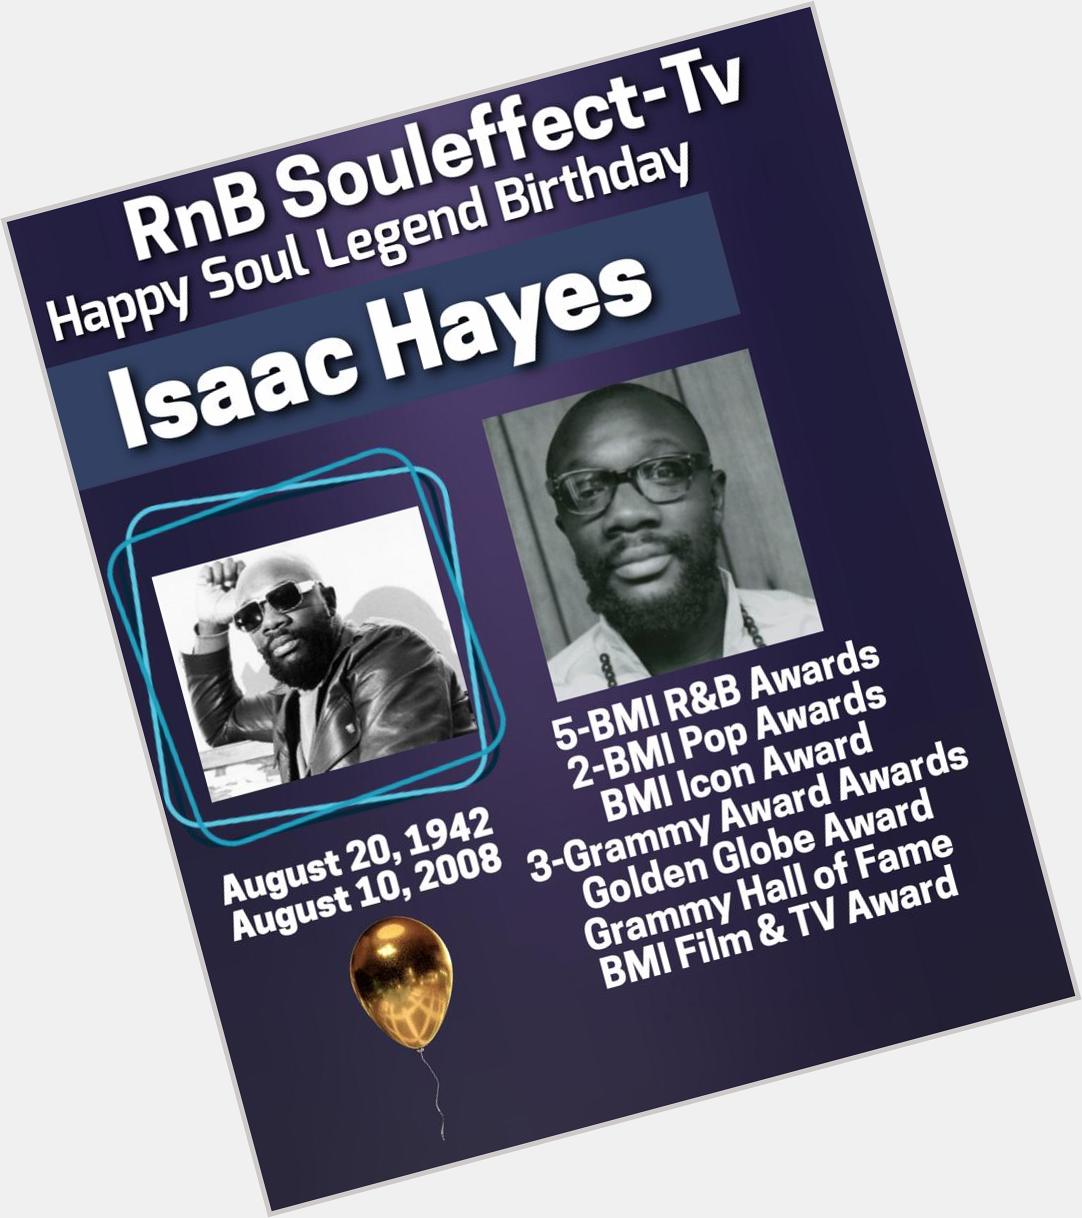 Happy Soul Legend Birthday 
Isaac Hayes  